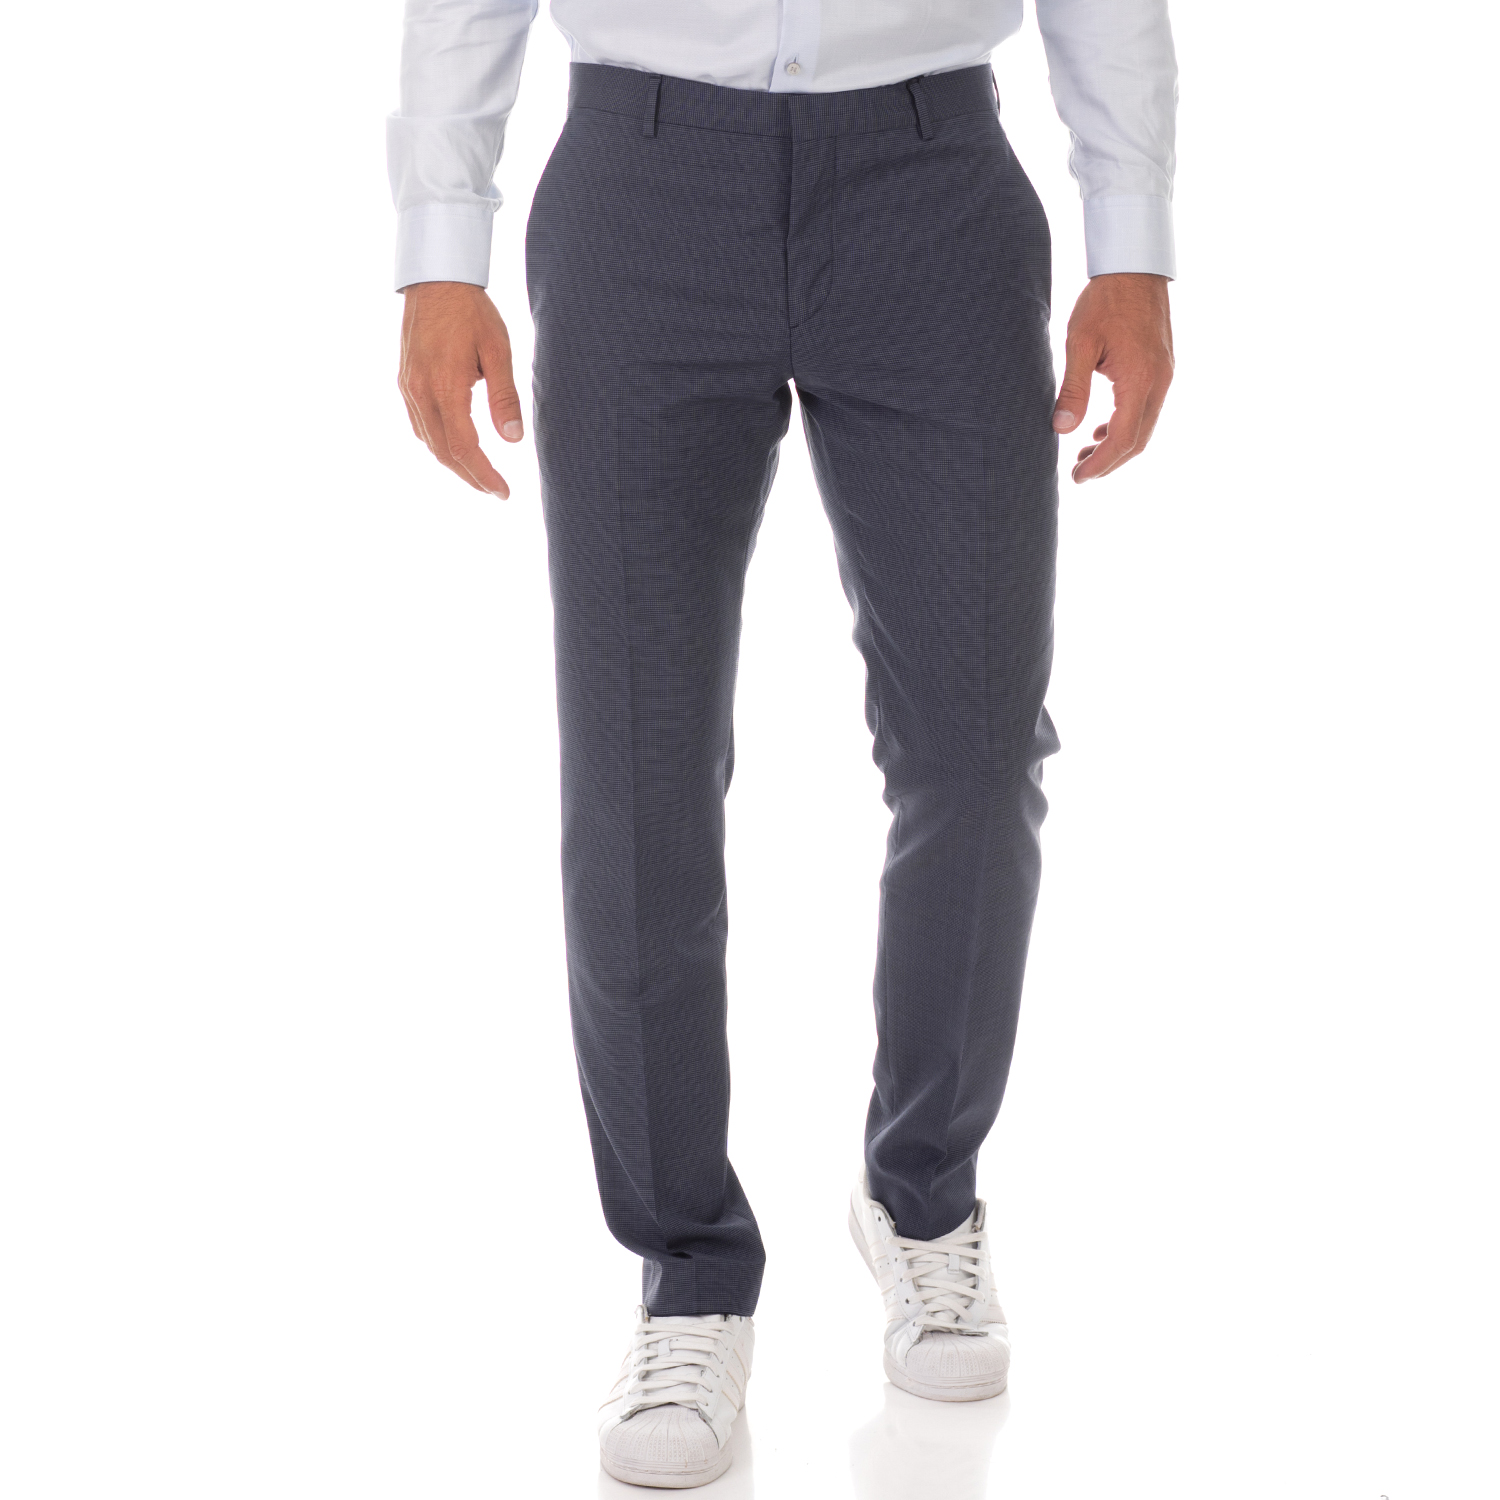 CK - Ανδρικό παντελόνι CK μπλε Ανδρικά/Ρούχα/Παντελόνια/Ισια Γραμμή